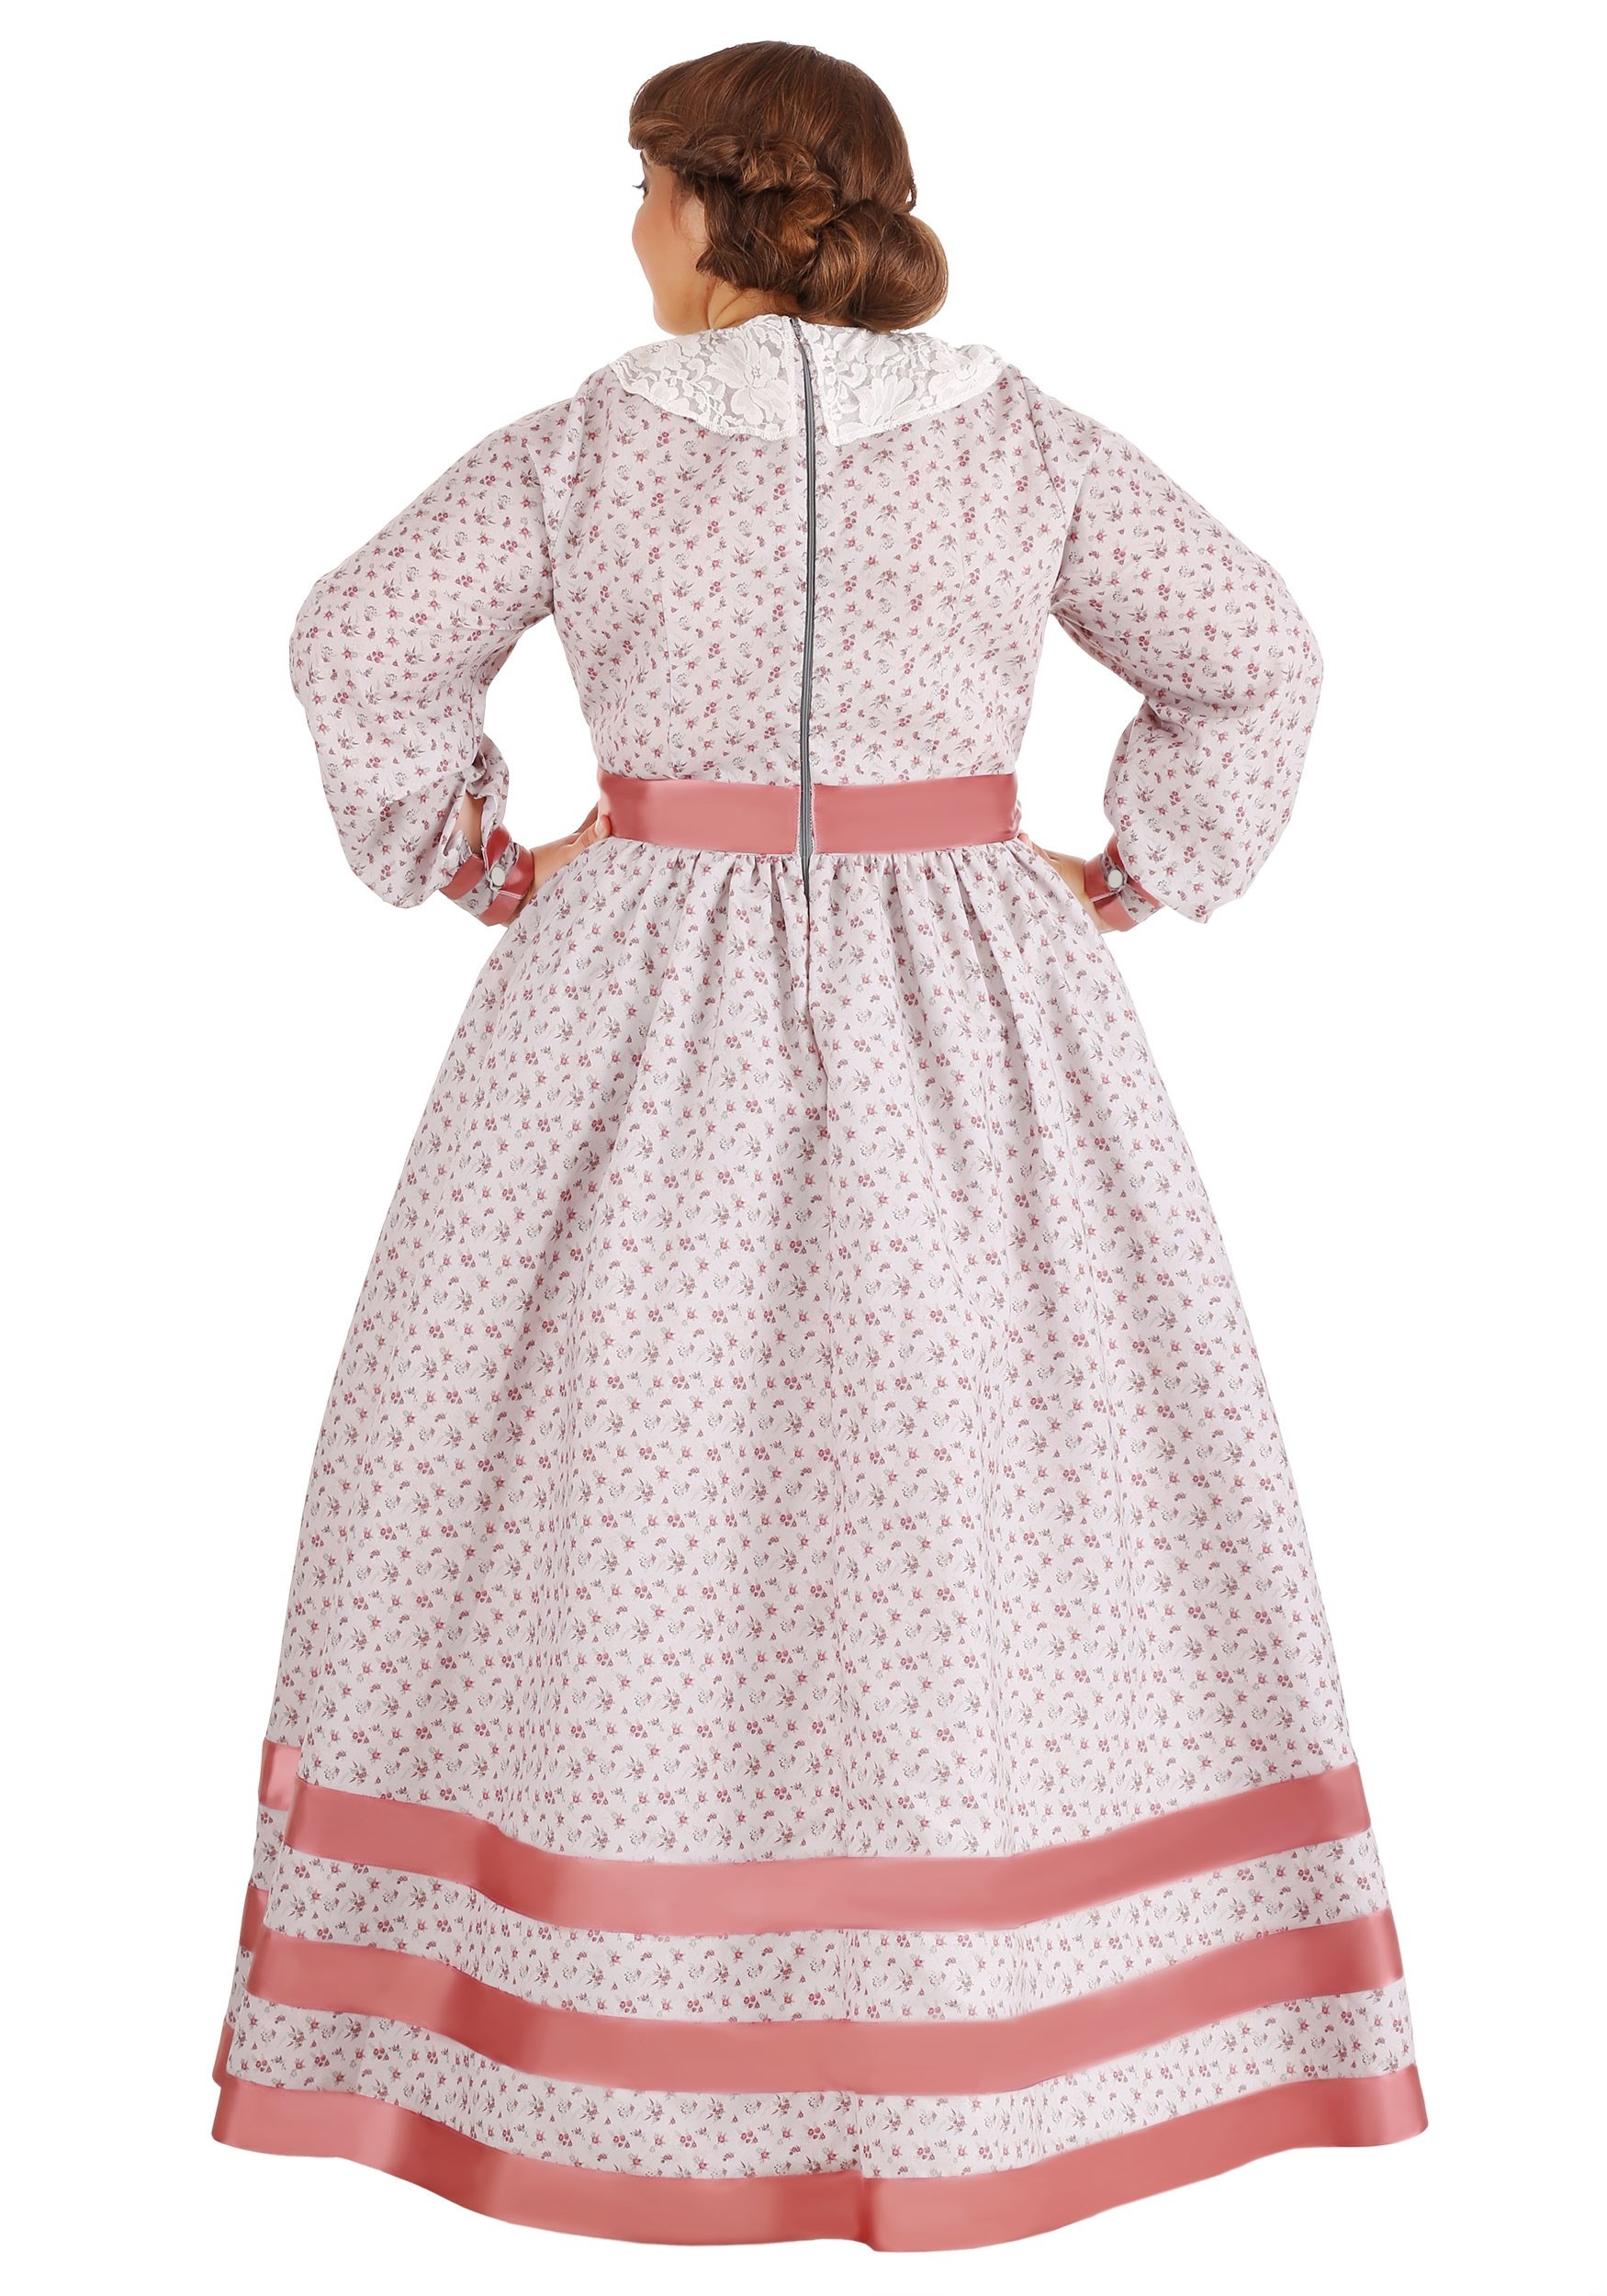 Plus Size Civil War Dress Costume For Women